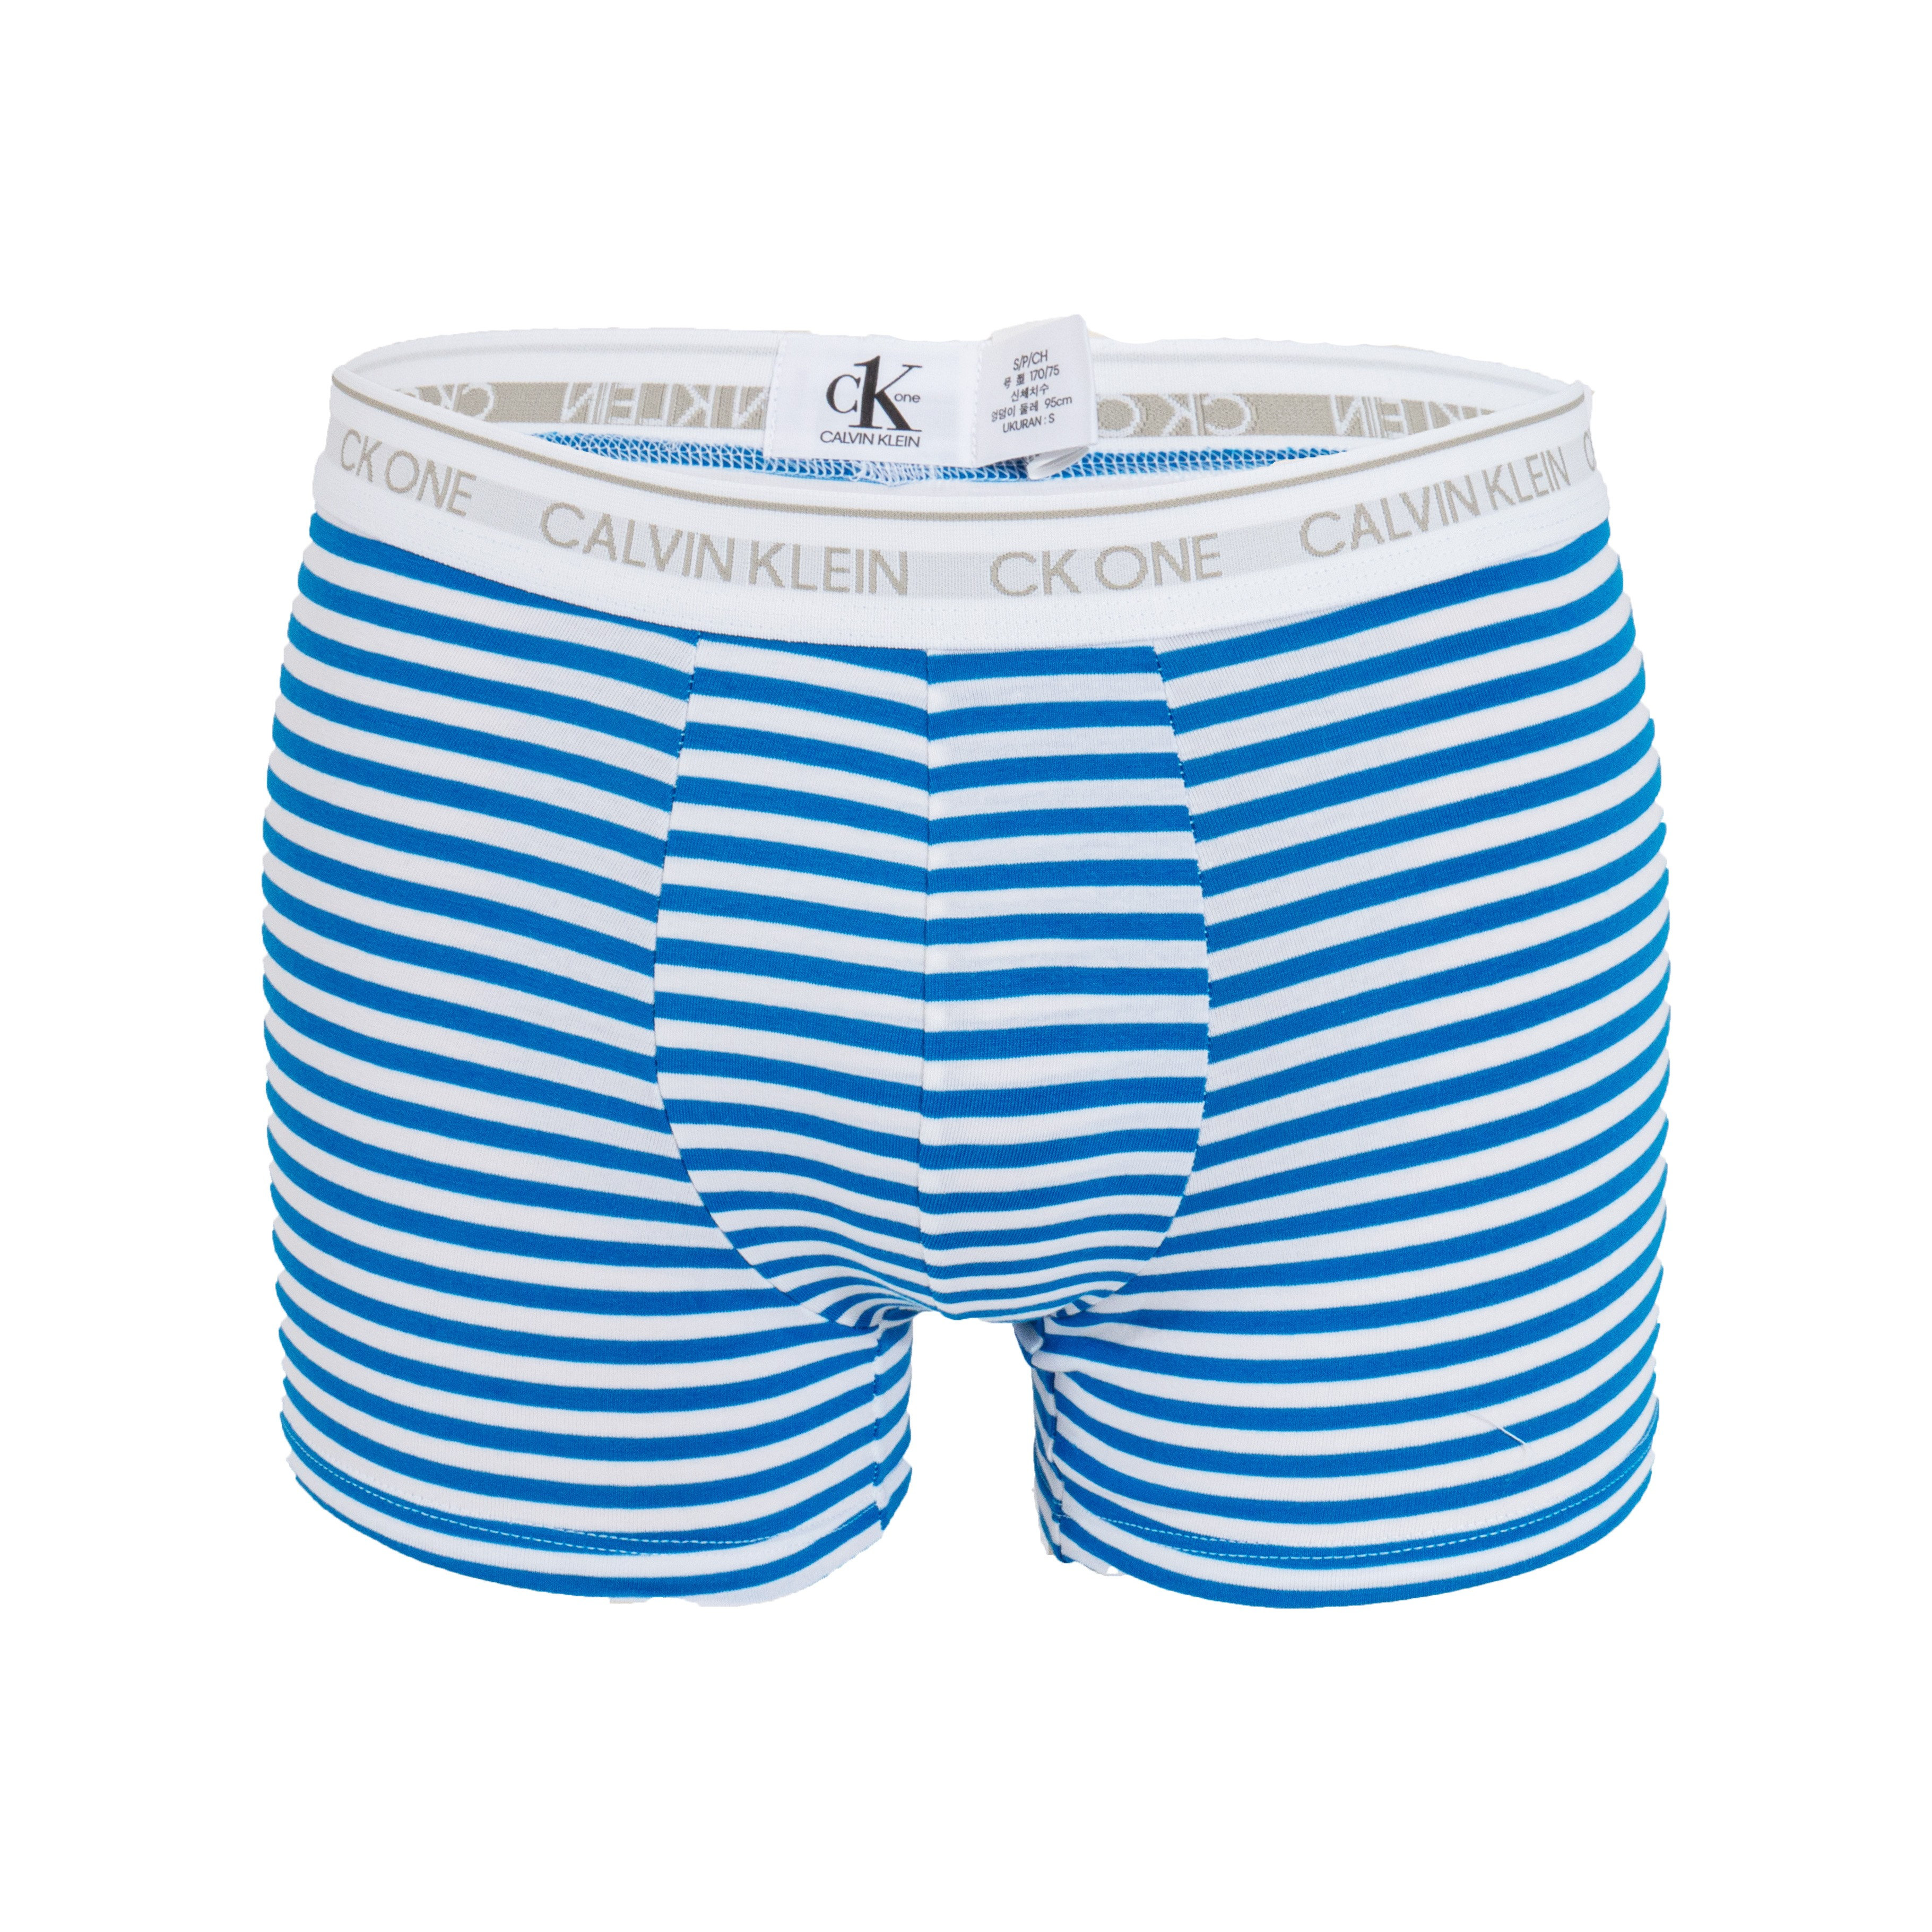 Pánske boxerky Calvin Klein CK One Stripes bielo-modré